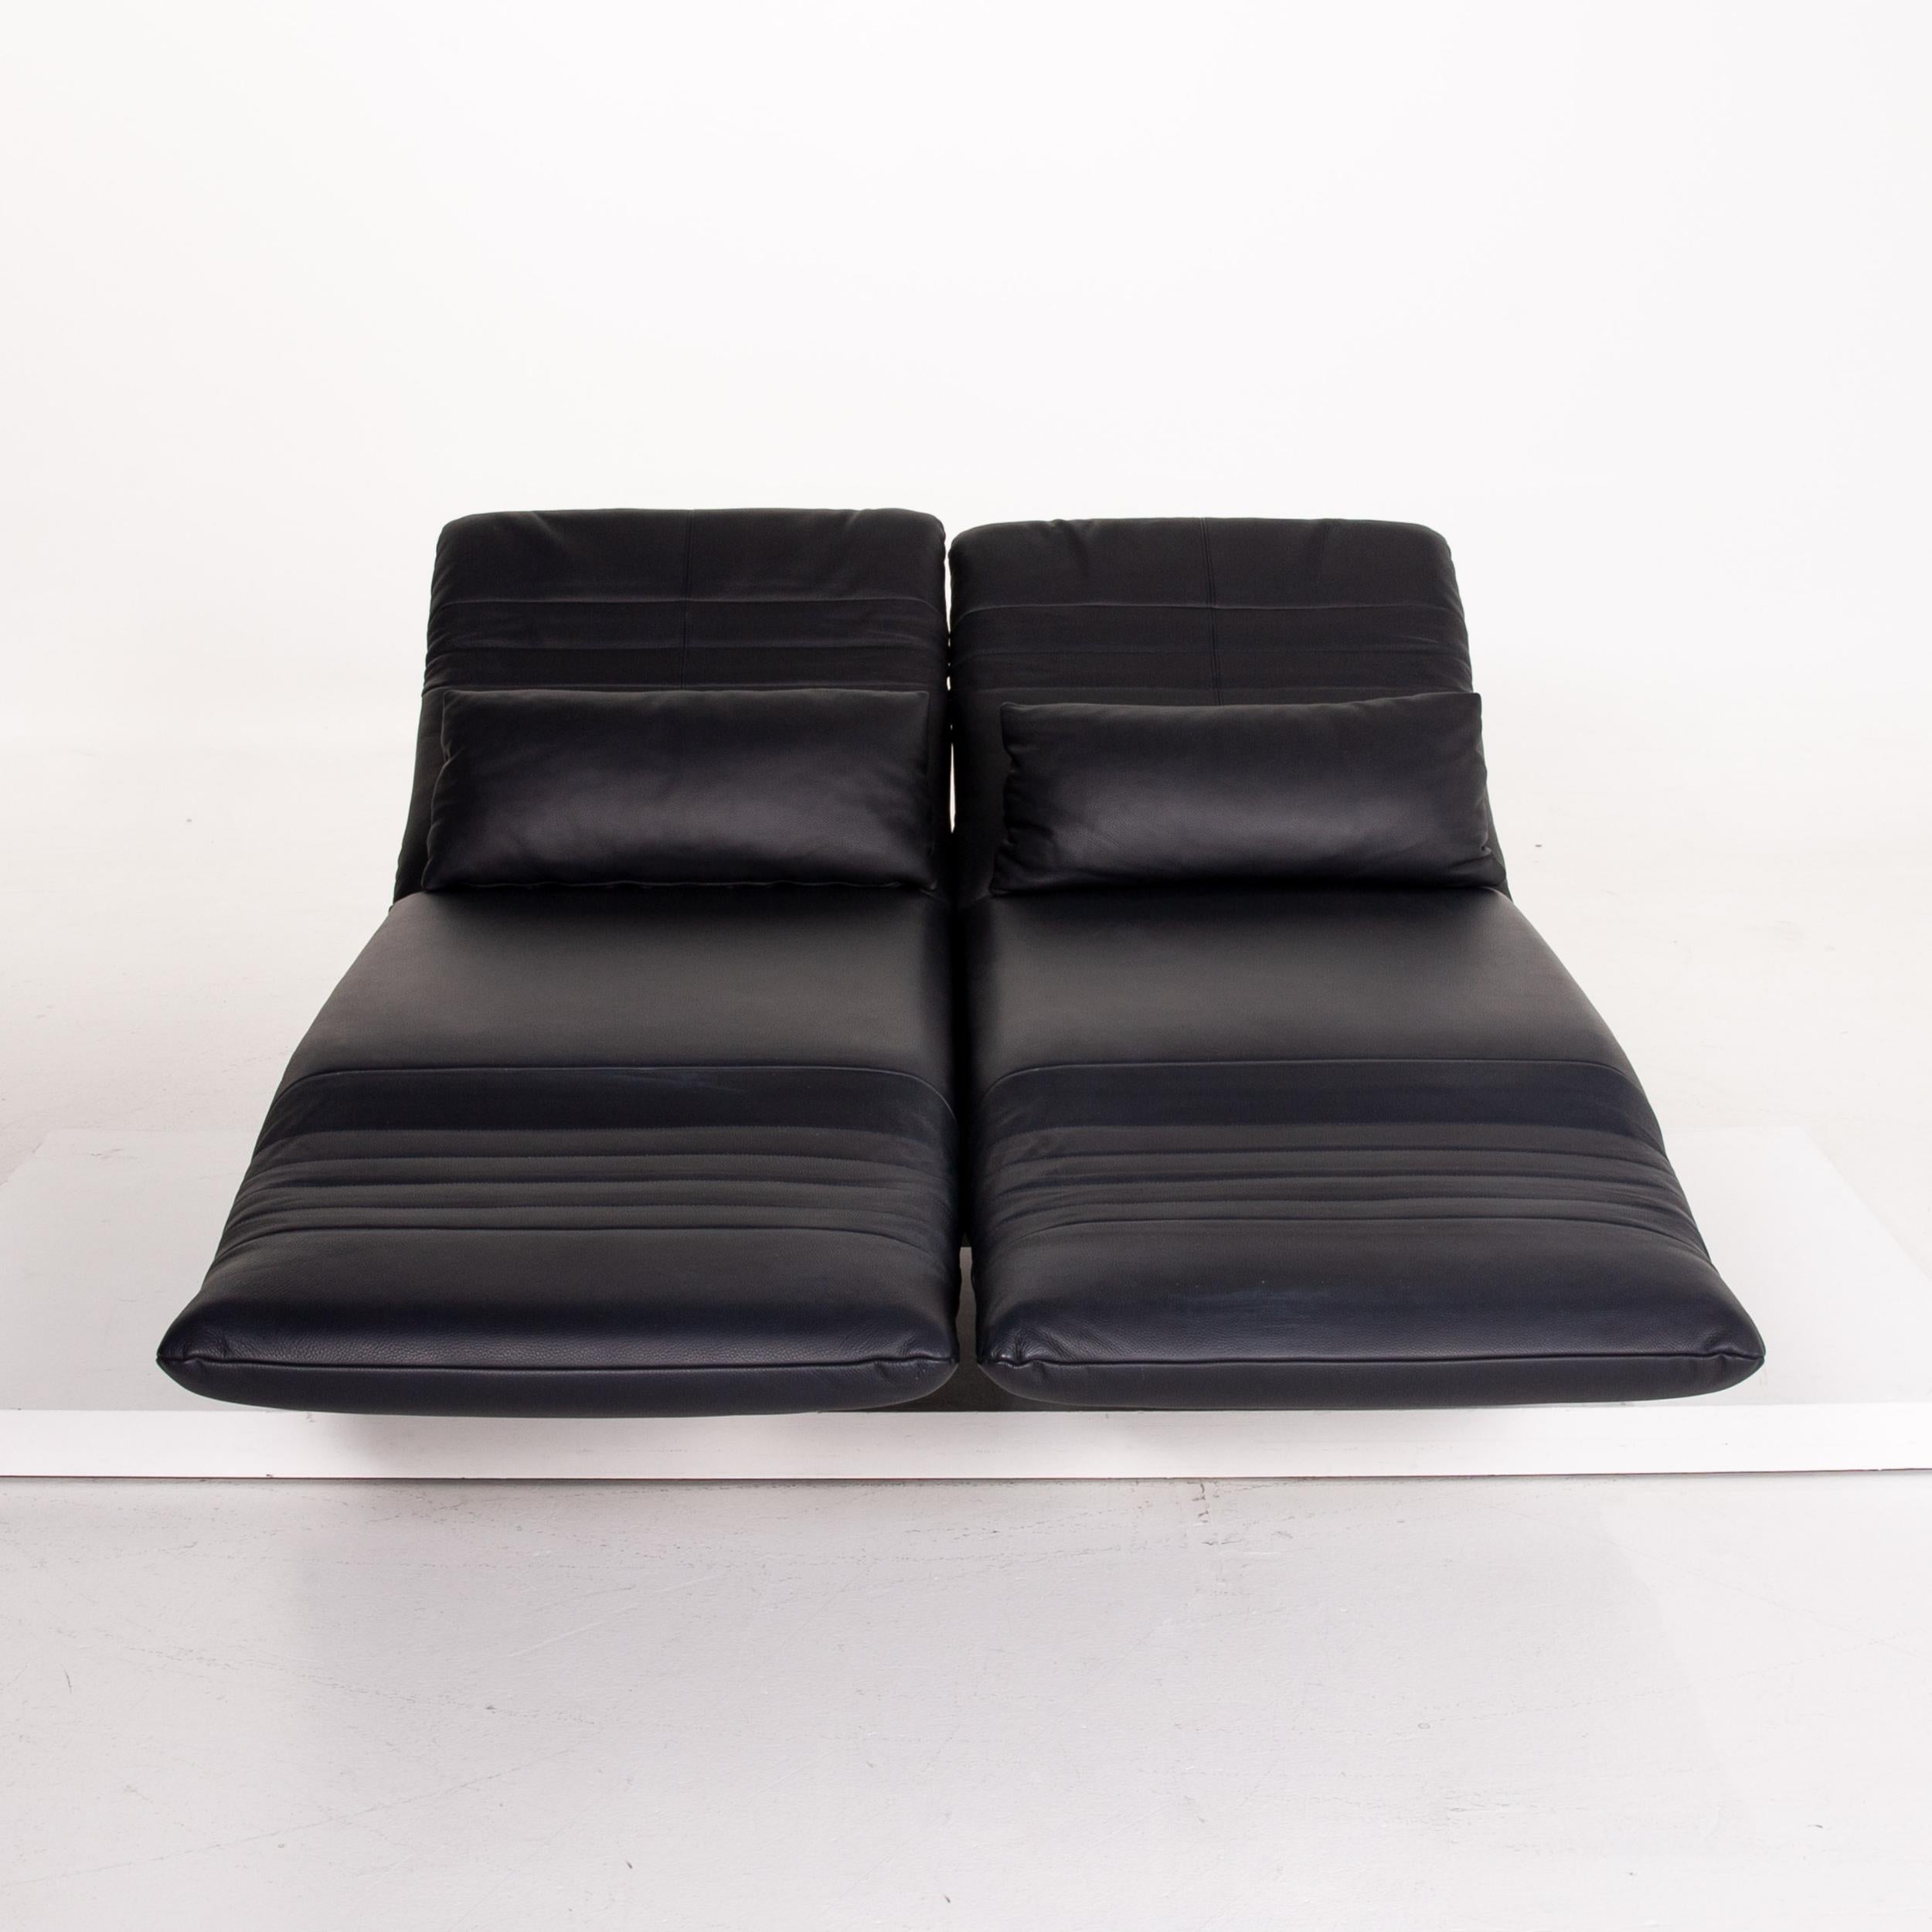 Rolf Benz Plura Leather Sofa Dark Blue Blue Two-Seat Function Sofa Bed Sleep 2